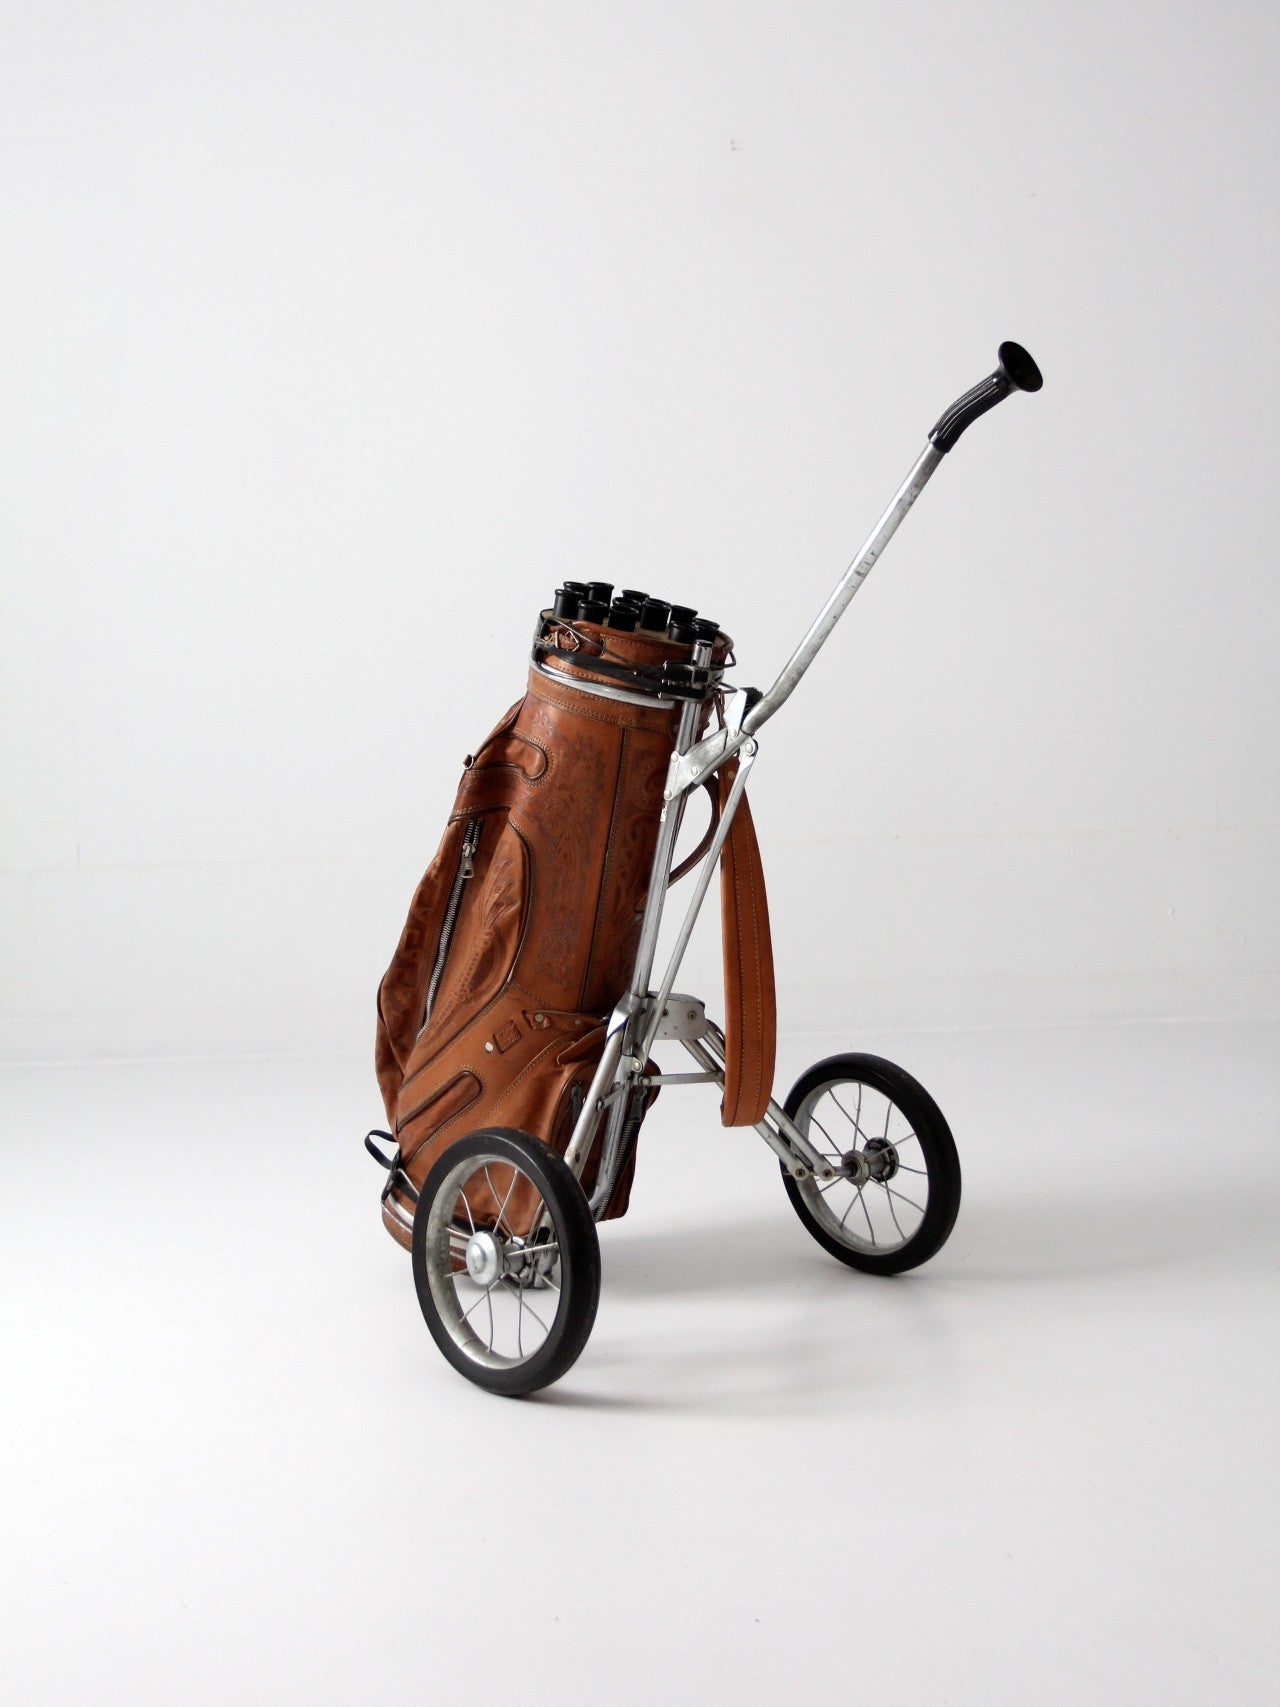 SP378 Harold Vintage Leather Golf Bag and Clubs Prop Rental - ACME